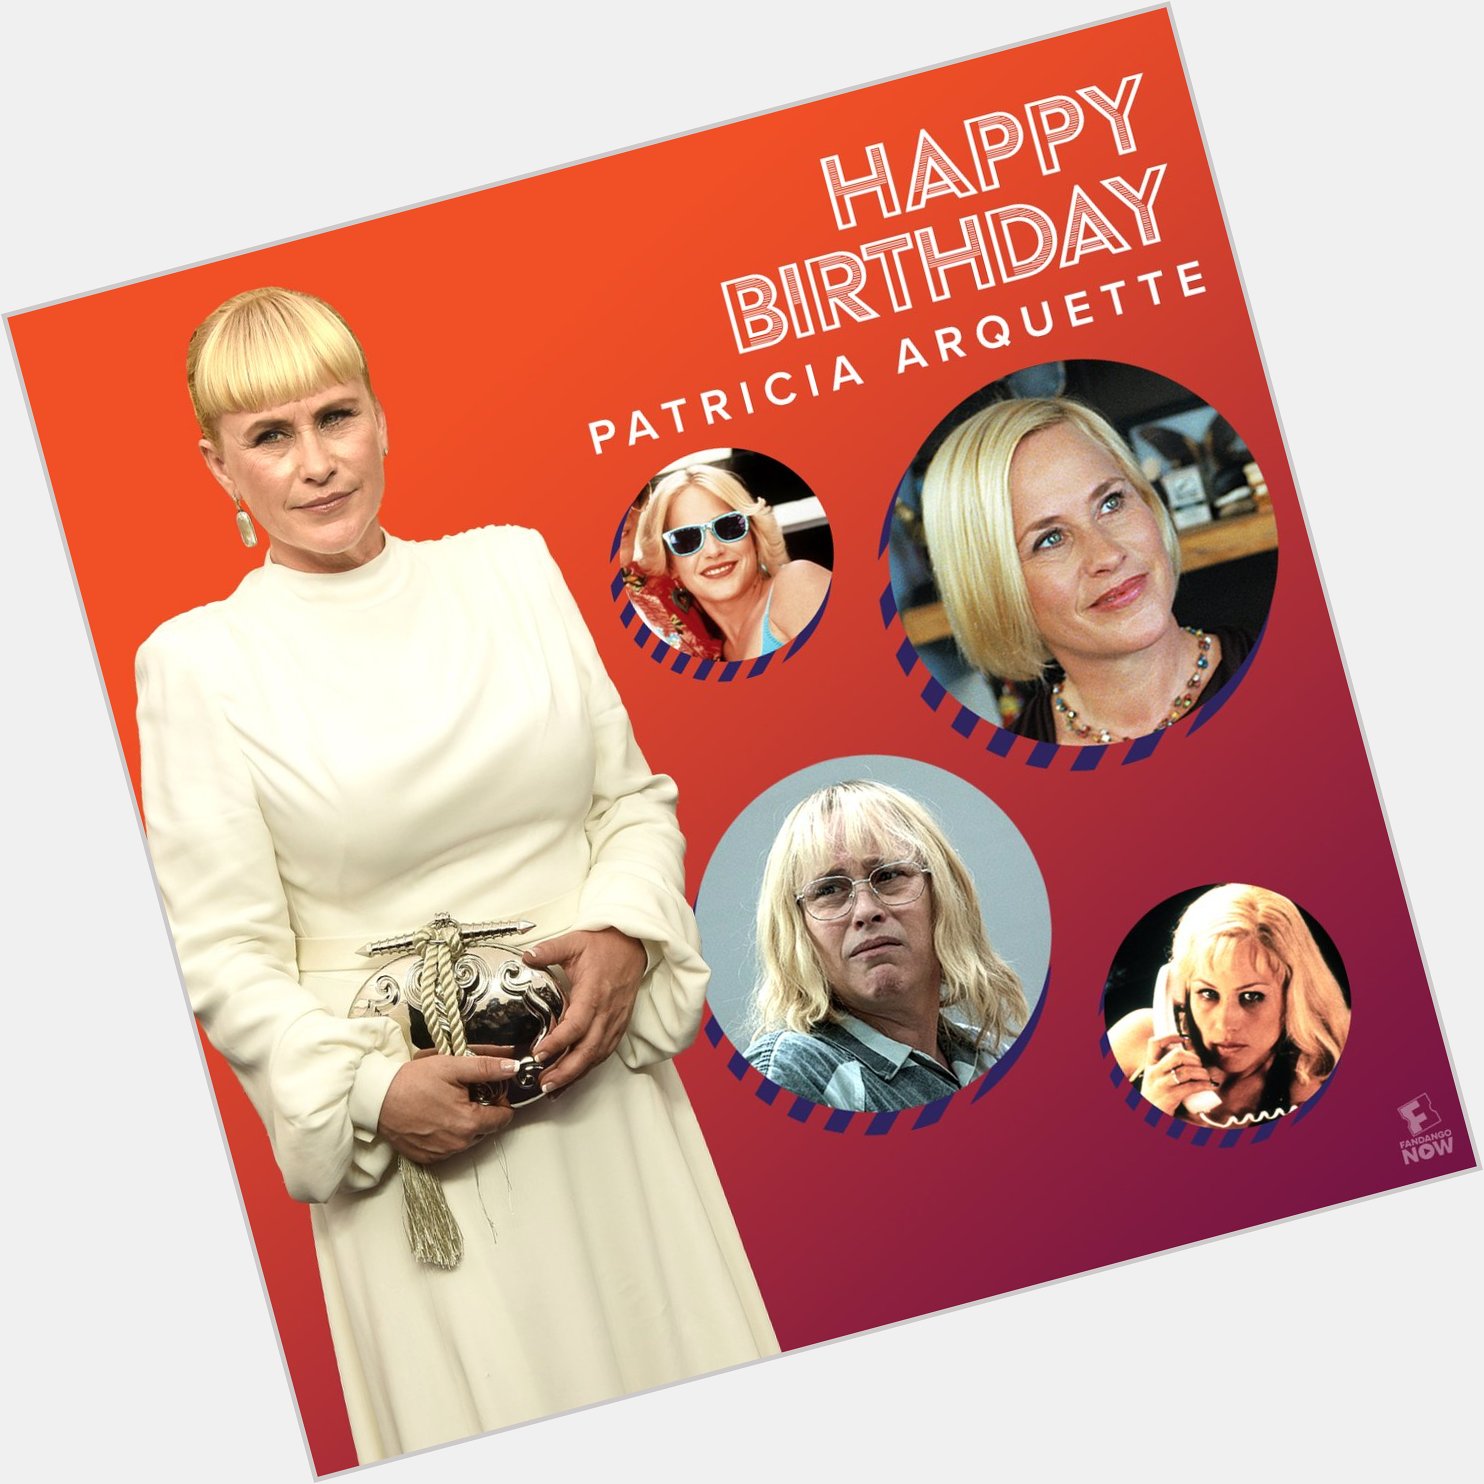 Wishing Patricia Arquette a happy birthday! 